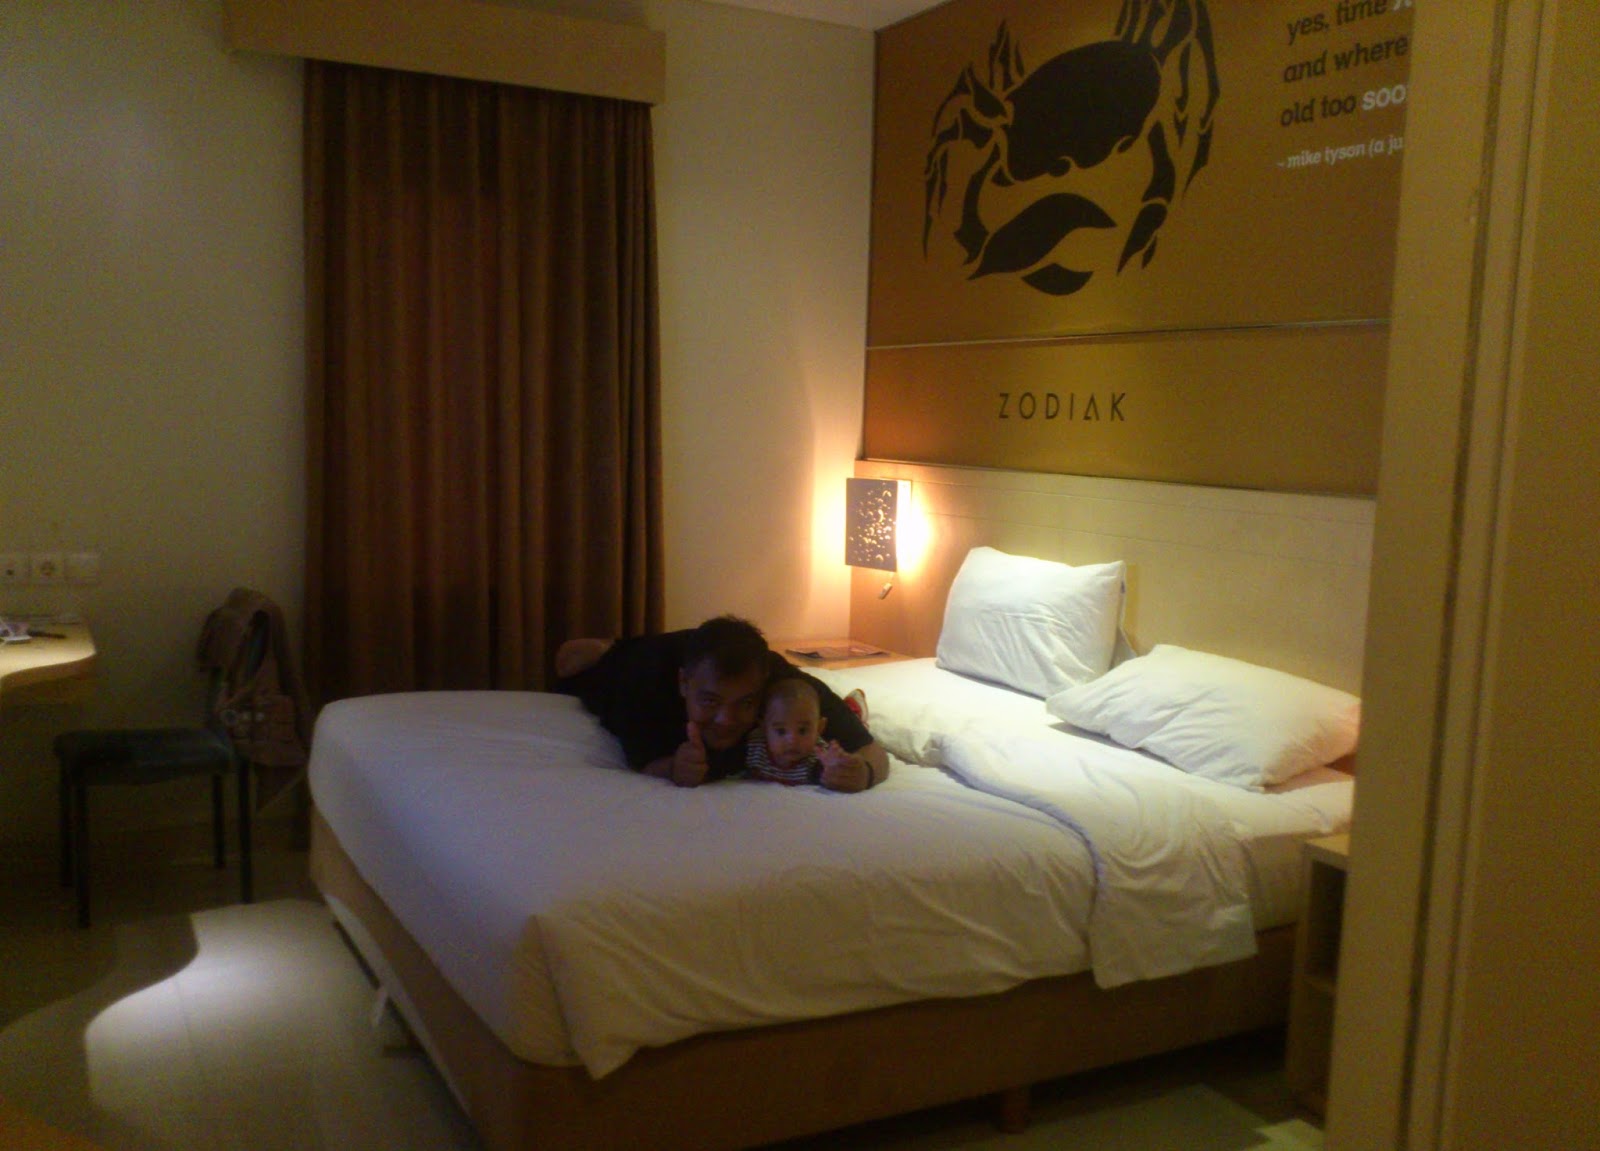 Blognya orang biasa: Review Hotel Zodiak Asia Afrika dan 